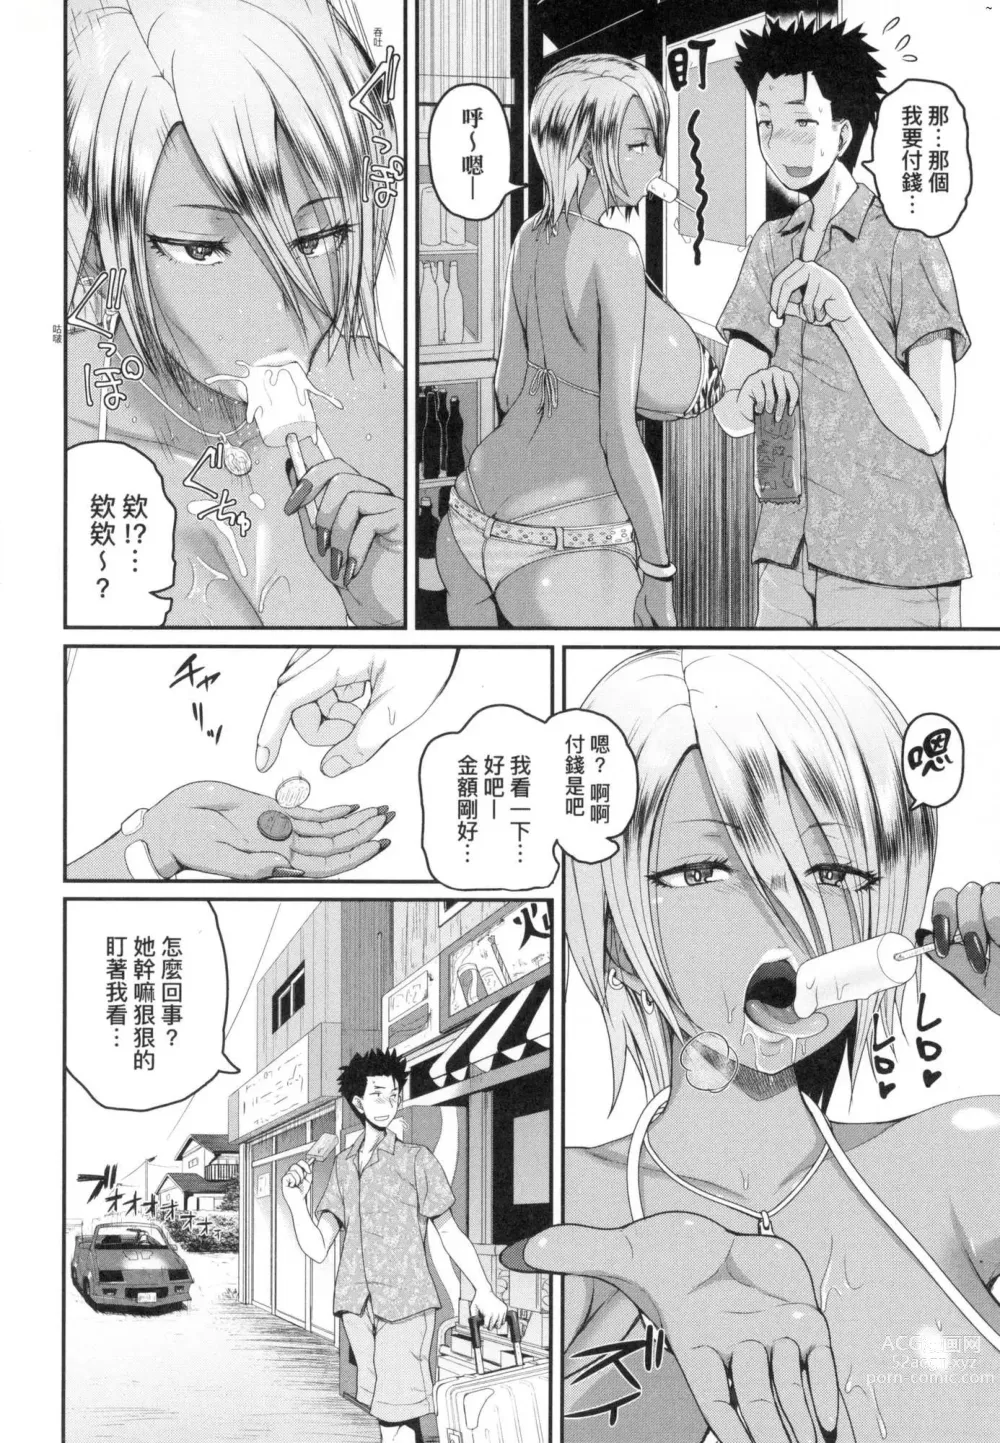 Page 11 of manga 歡迎蒞臨! SEX無限制之島到底是怎樣? (decensored)